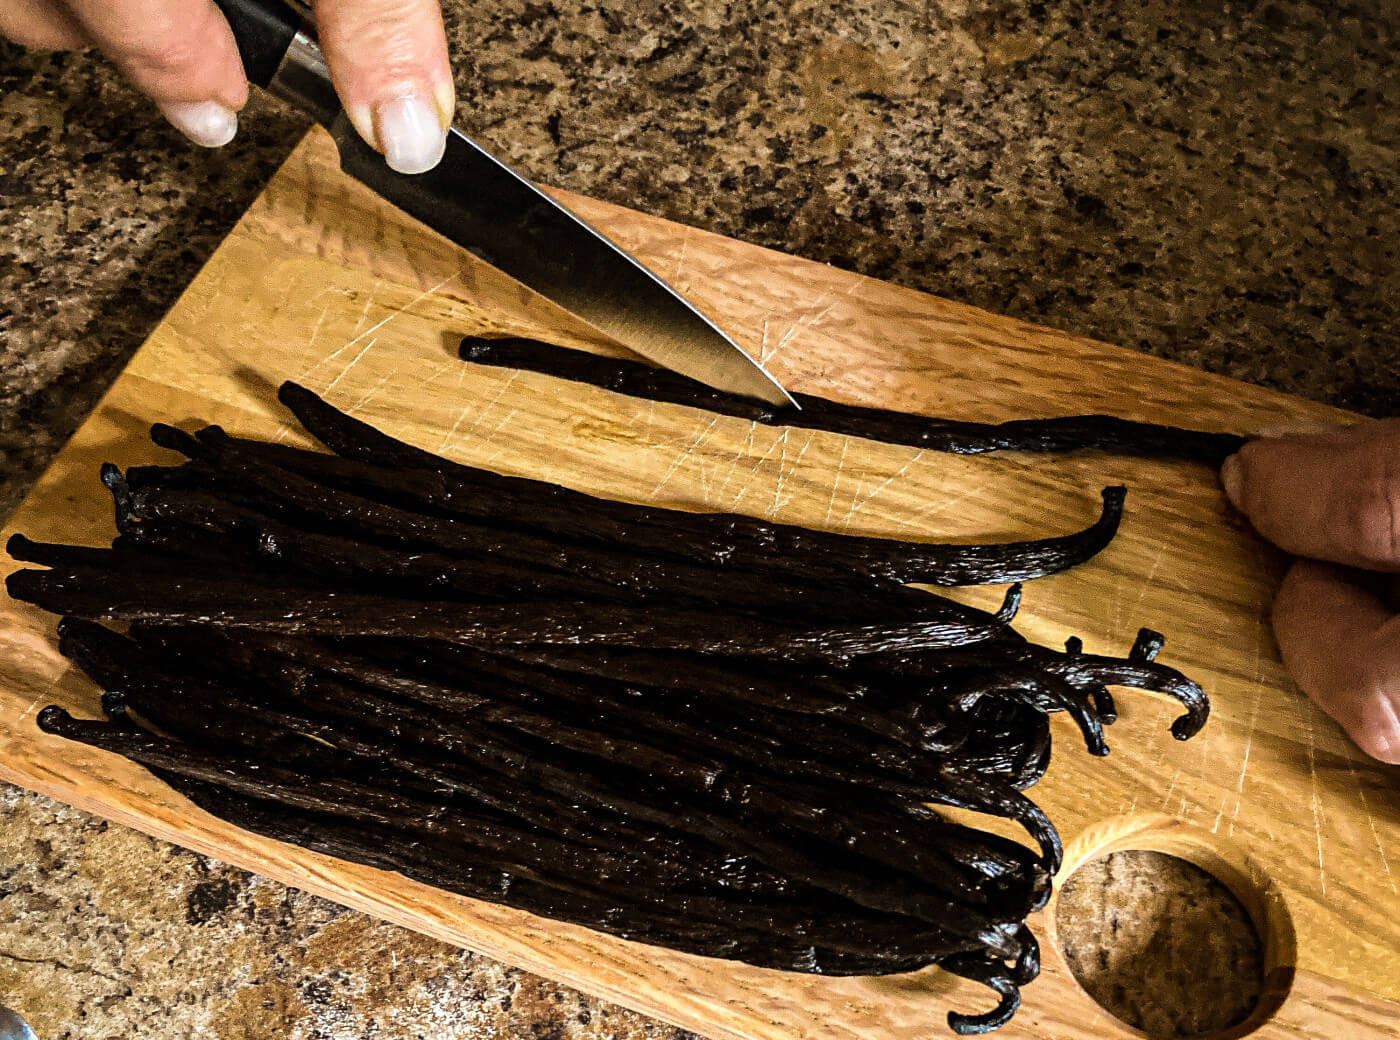 Cut vanilla beans lengthwise